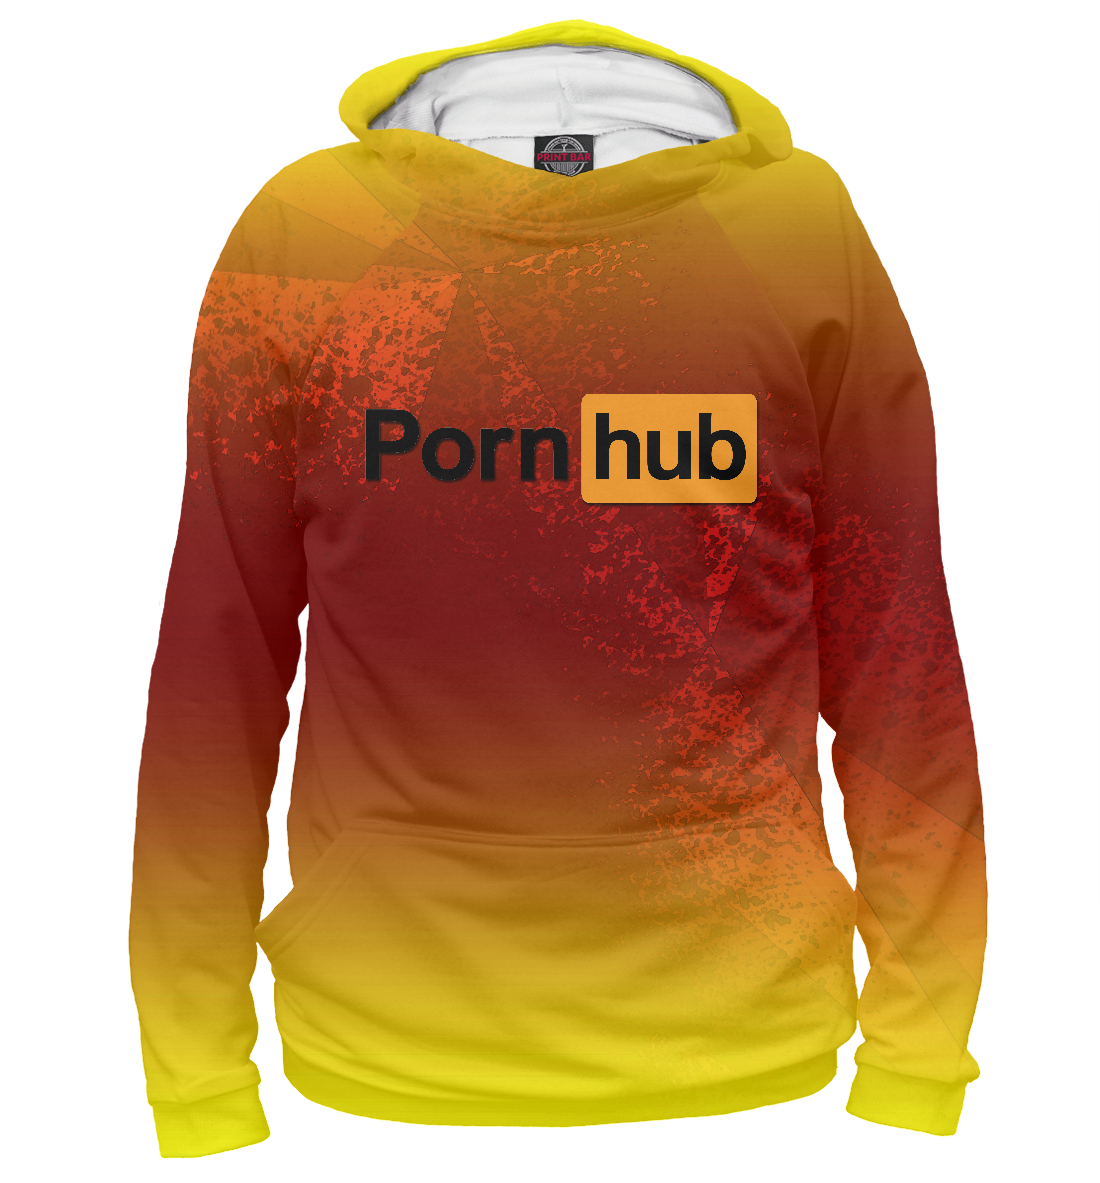 Porn Hub Review